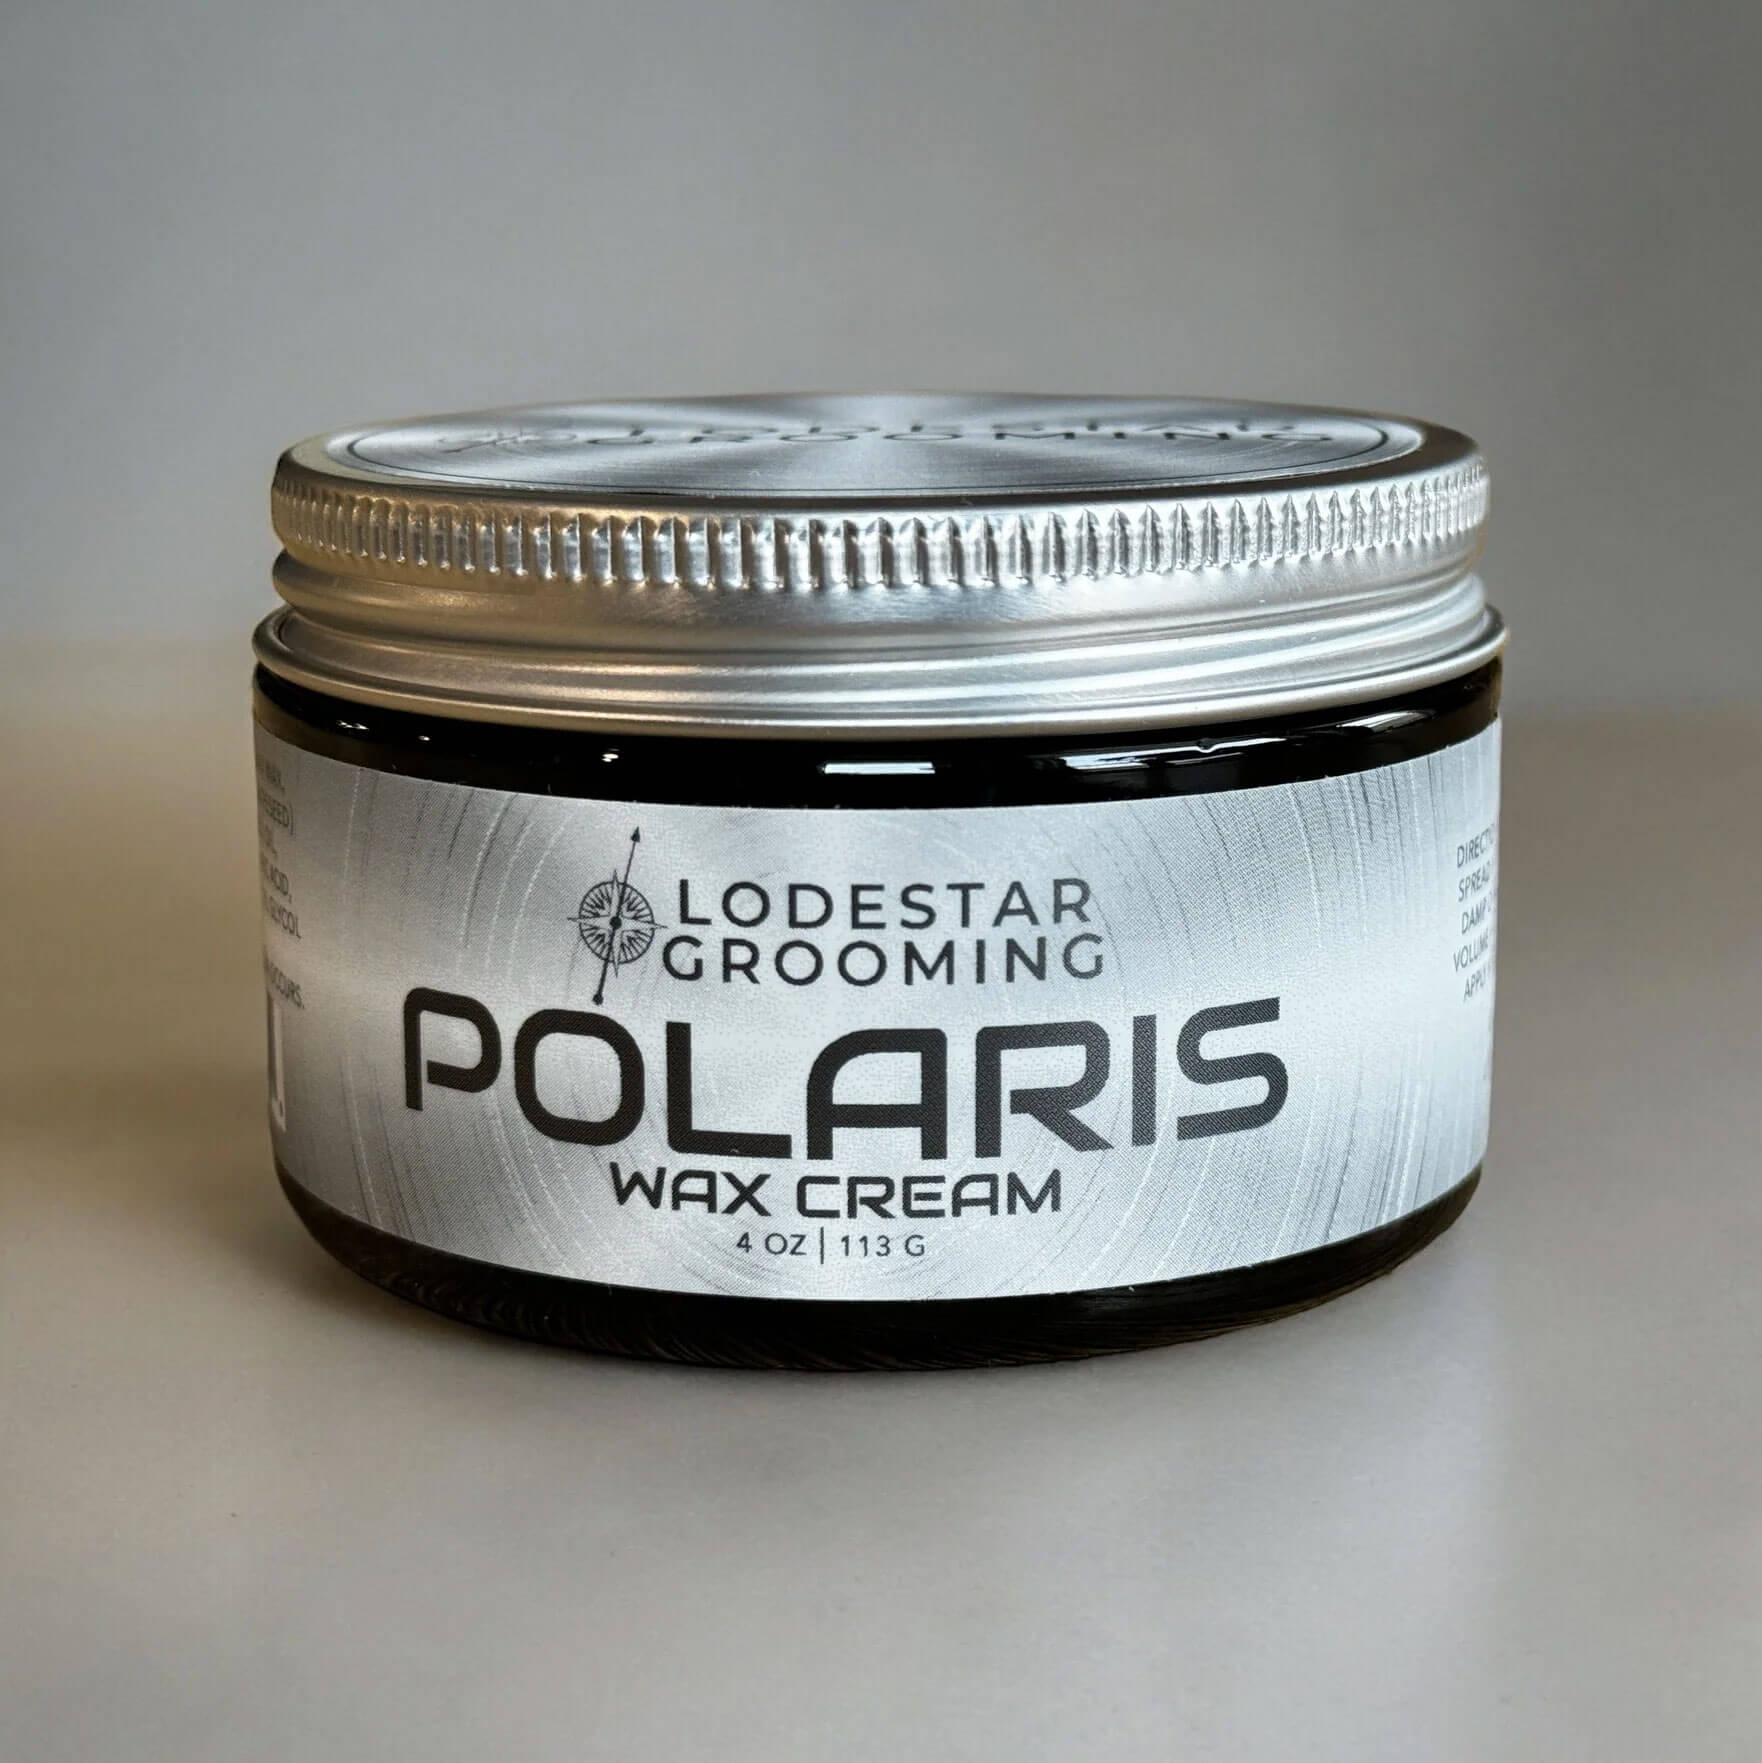 Lodestar Grooming Polaris Wax Cream